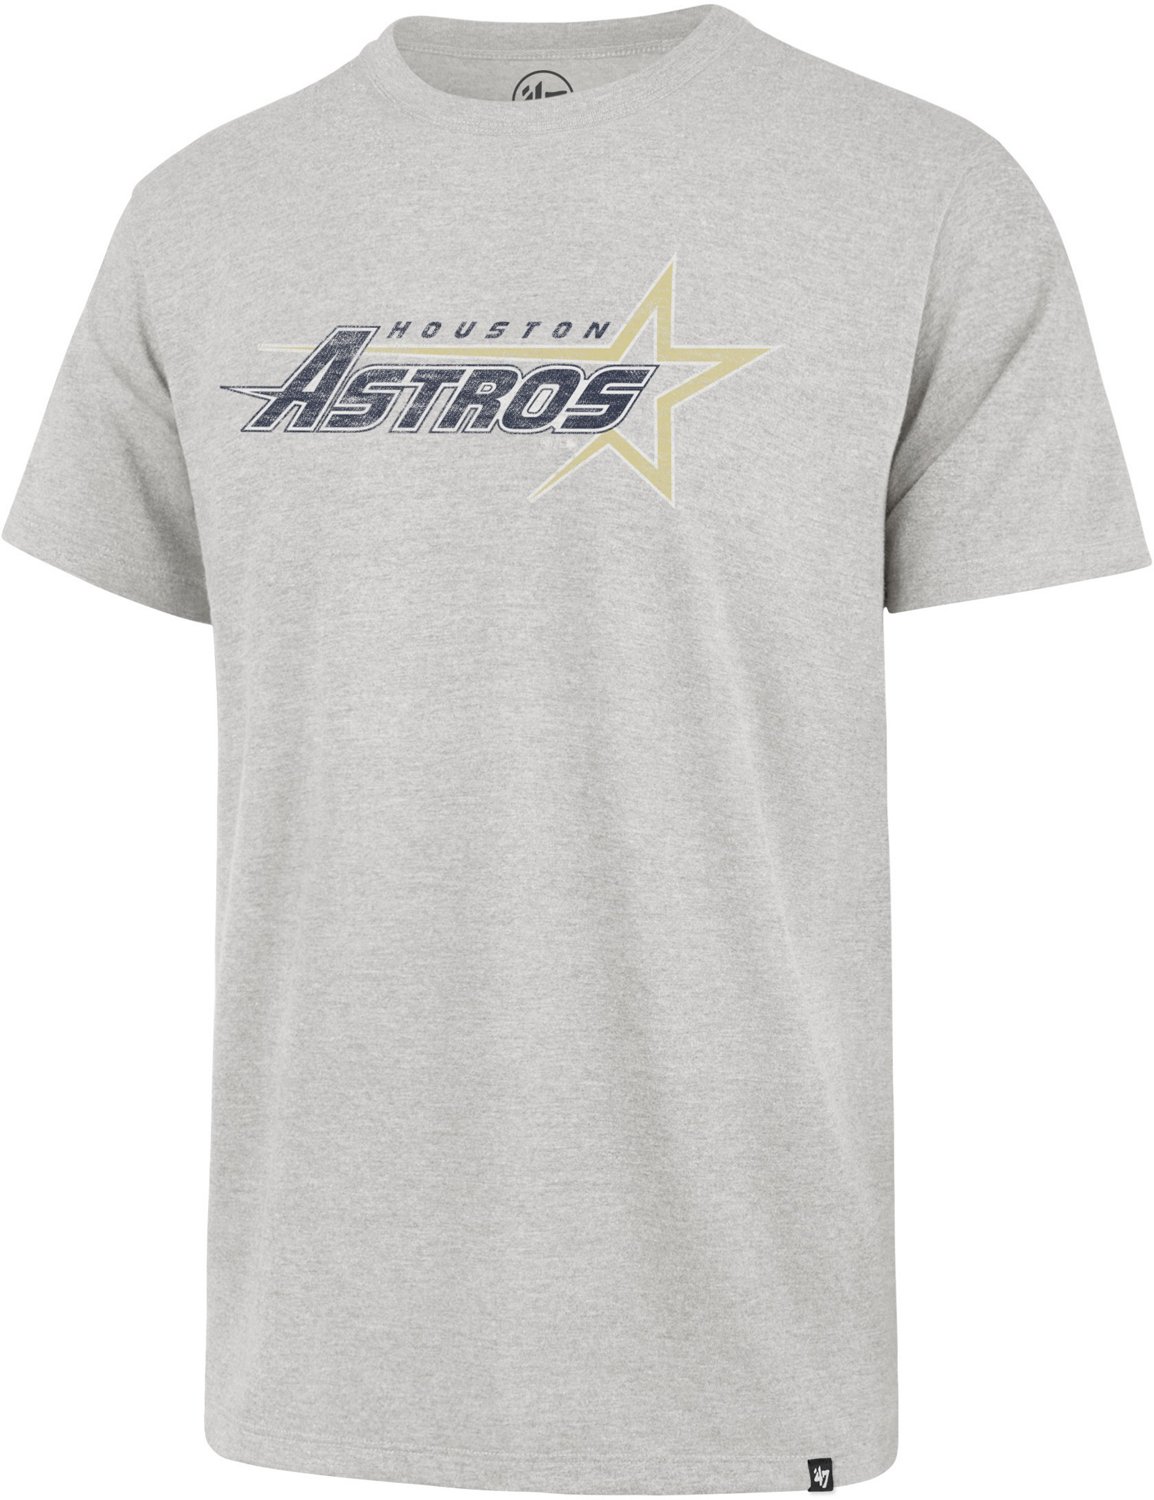 astros plaid shirt